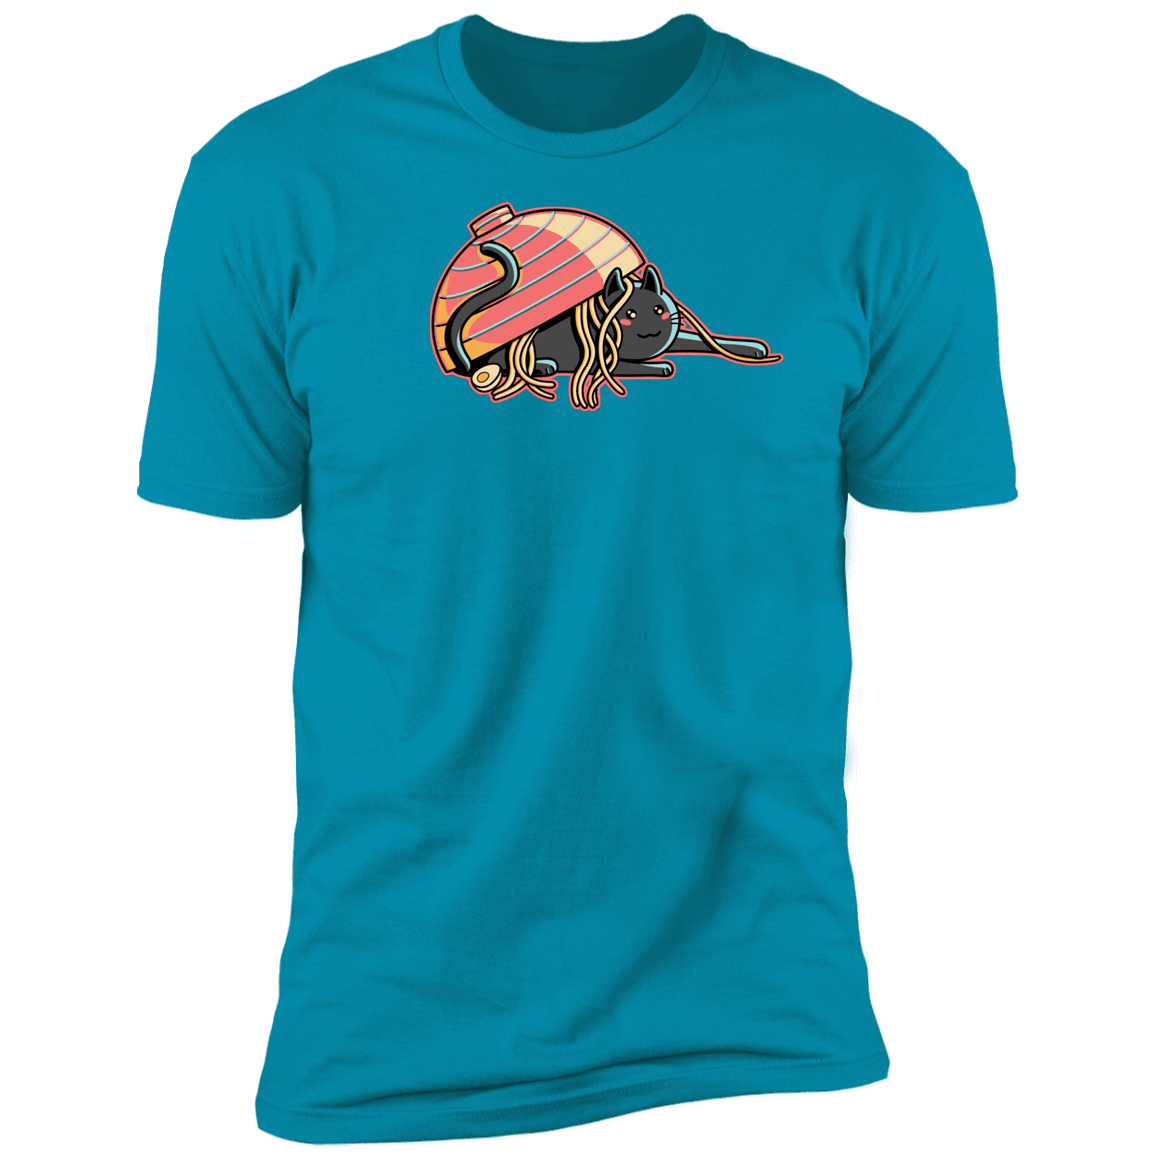 T-Shirts Turquoise / S Ramen Loving Cat Men's Premium T-Shirt